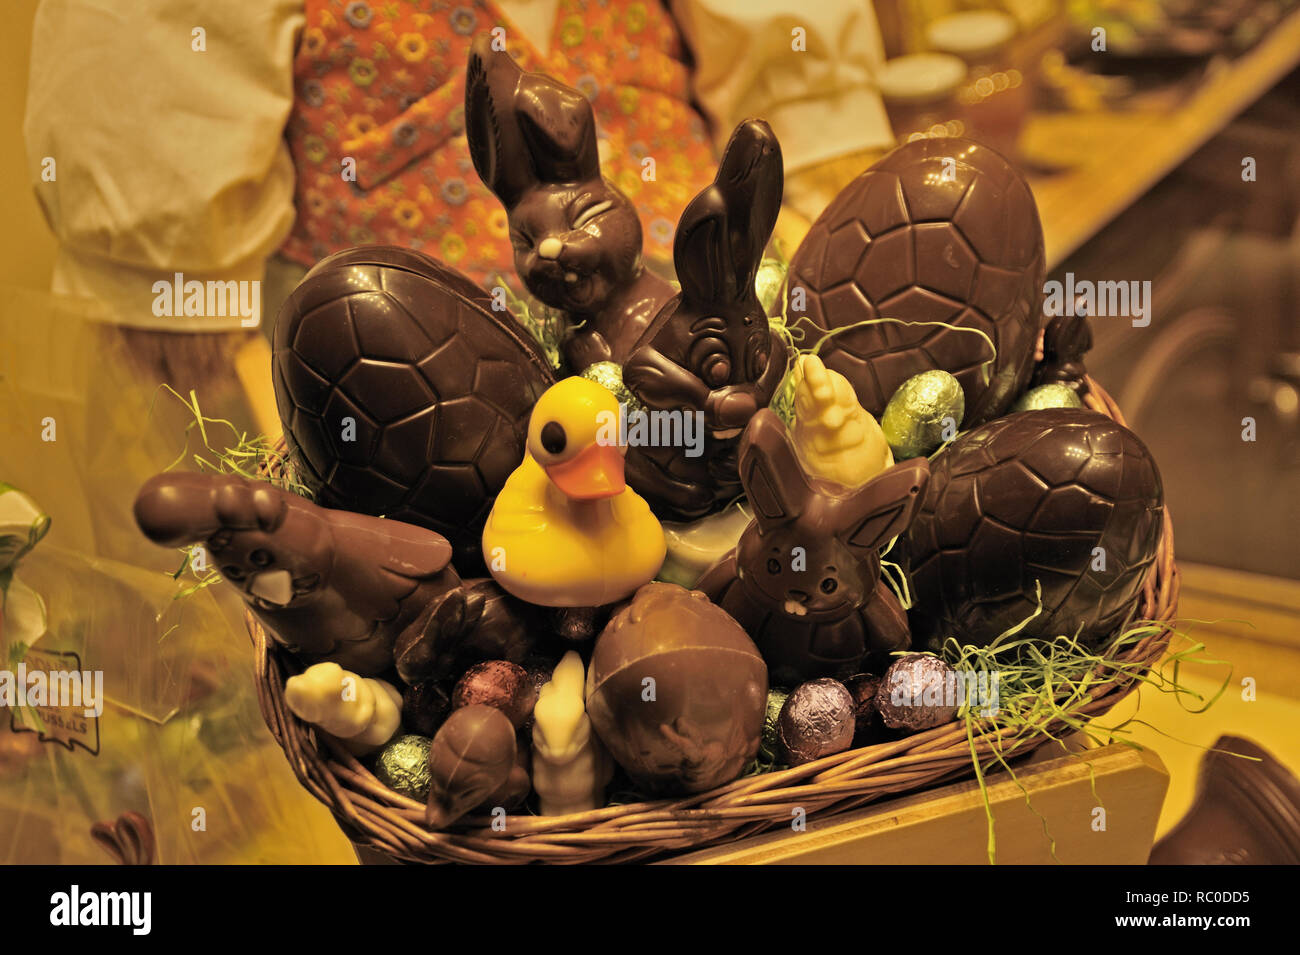 Belgische Schokopralinen zu Ostern, Brüssel,  Belgien, Europa  | Belgium chocolates for Easter time,  Brussels, Belgium, Europe Stock Photo